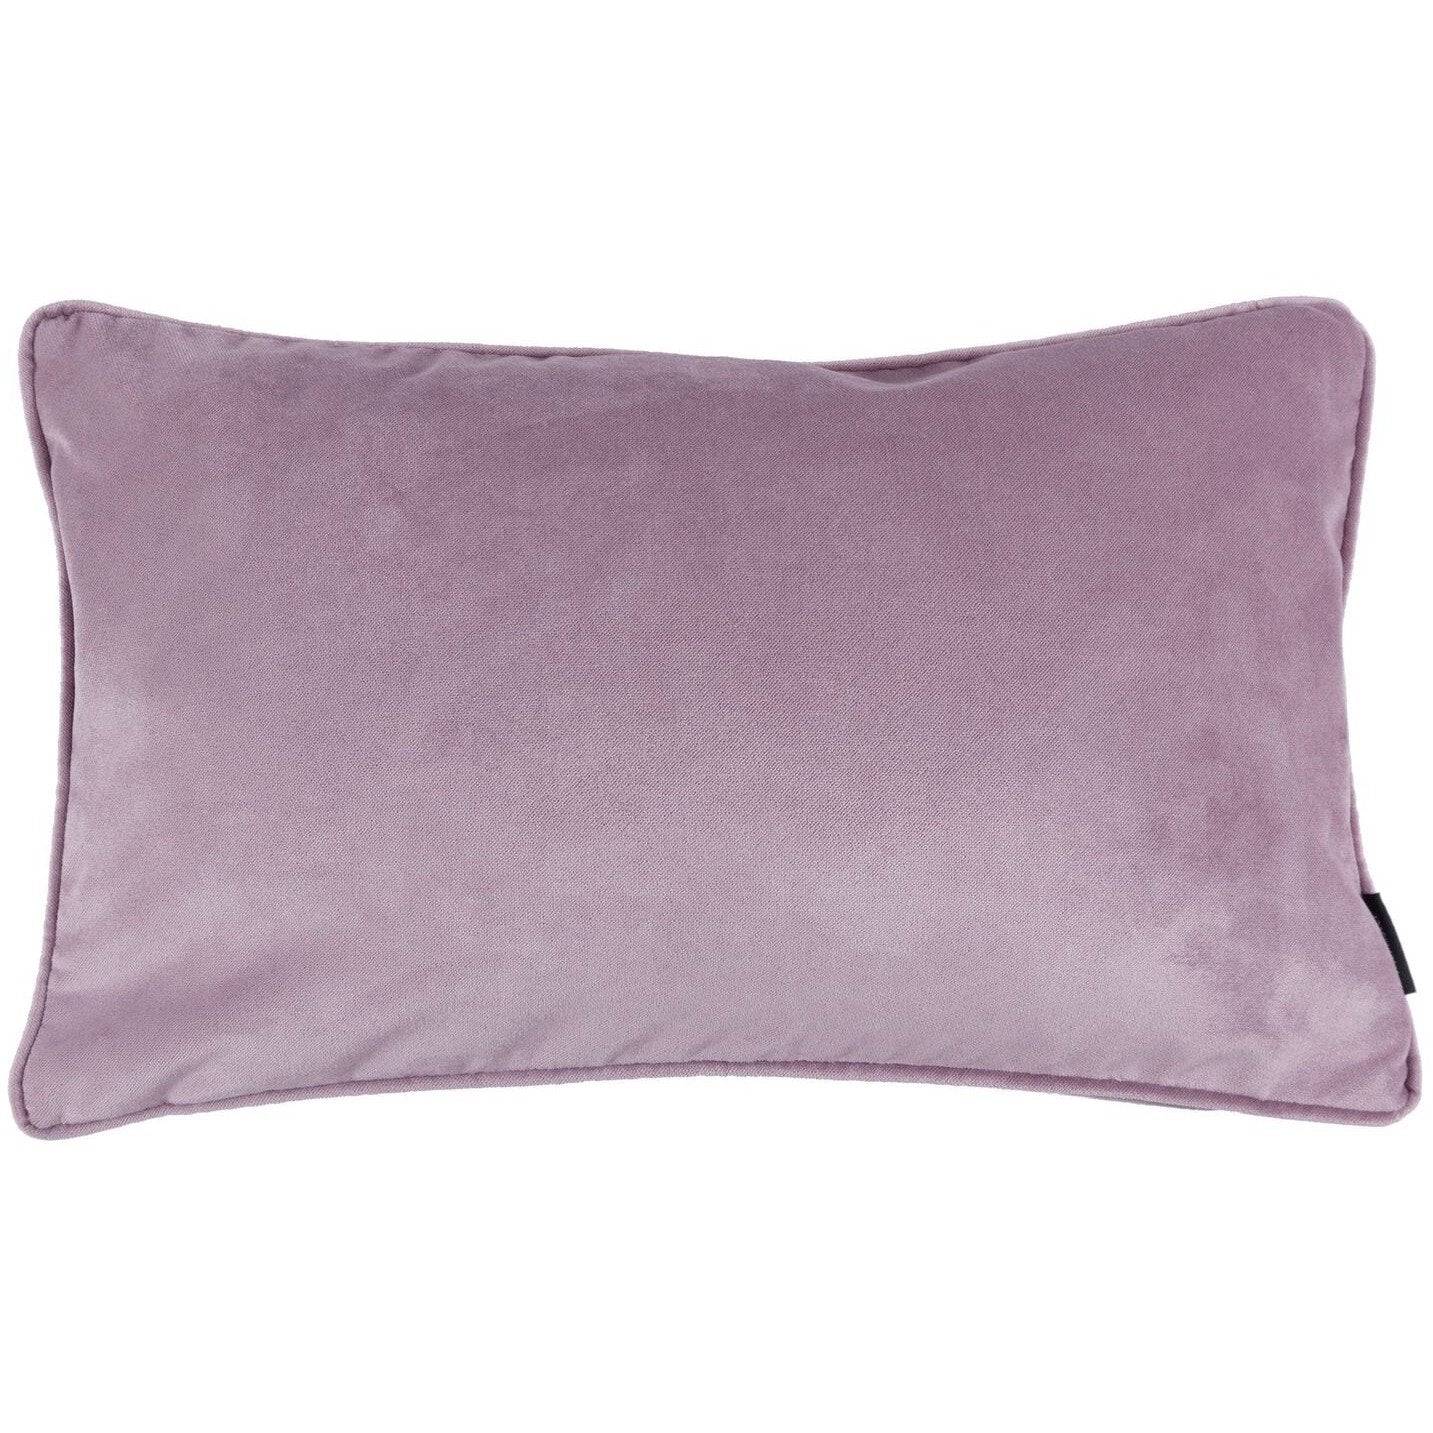 McAlister Textiles Matt Lilac Purple Velvet Pillow Pillow Cover Only 50cm x 30cm 